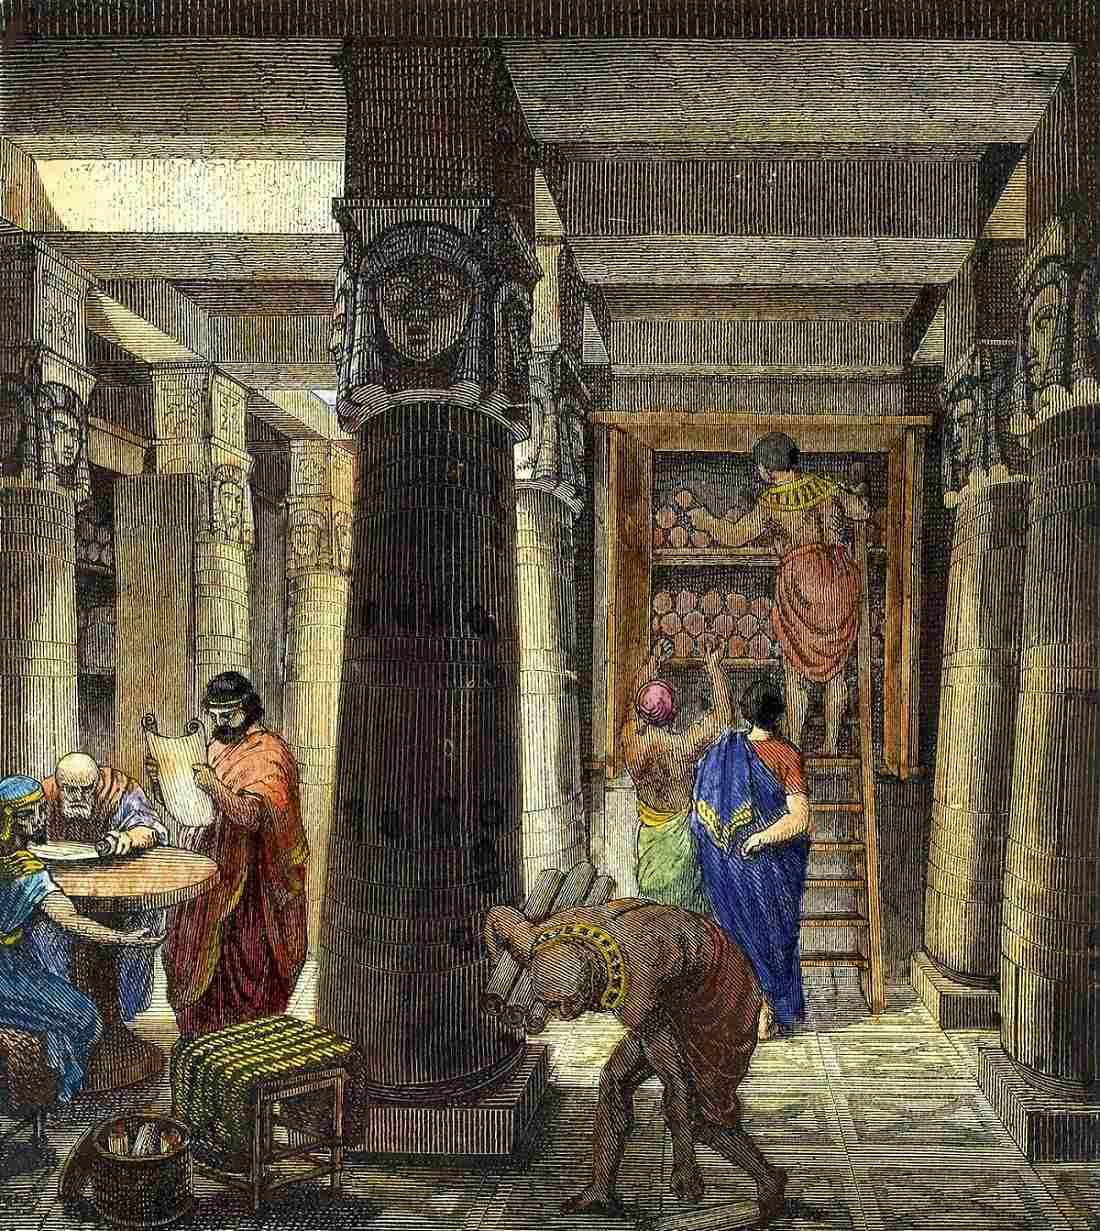 The Library of Ashurbanipal: Nejstarší známá knihovna, která inspirovala Library of Alexandria 1